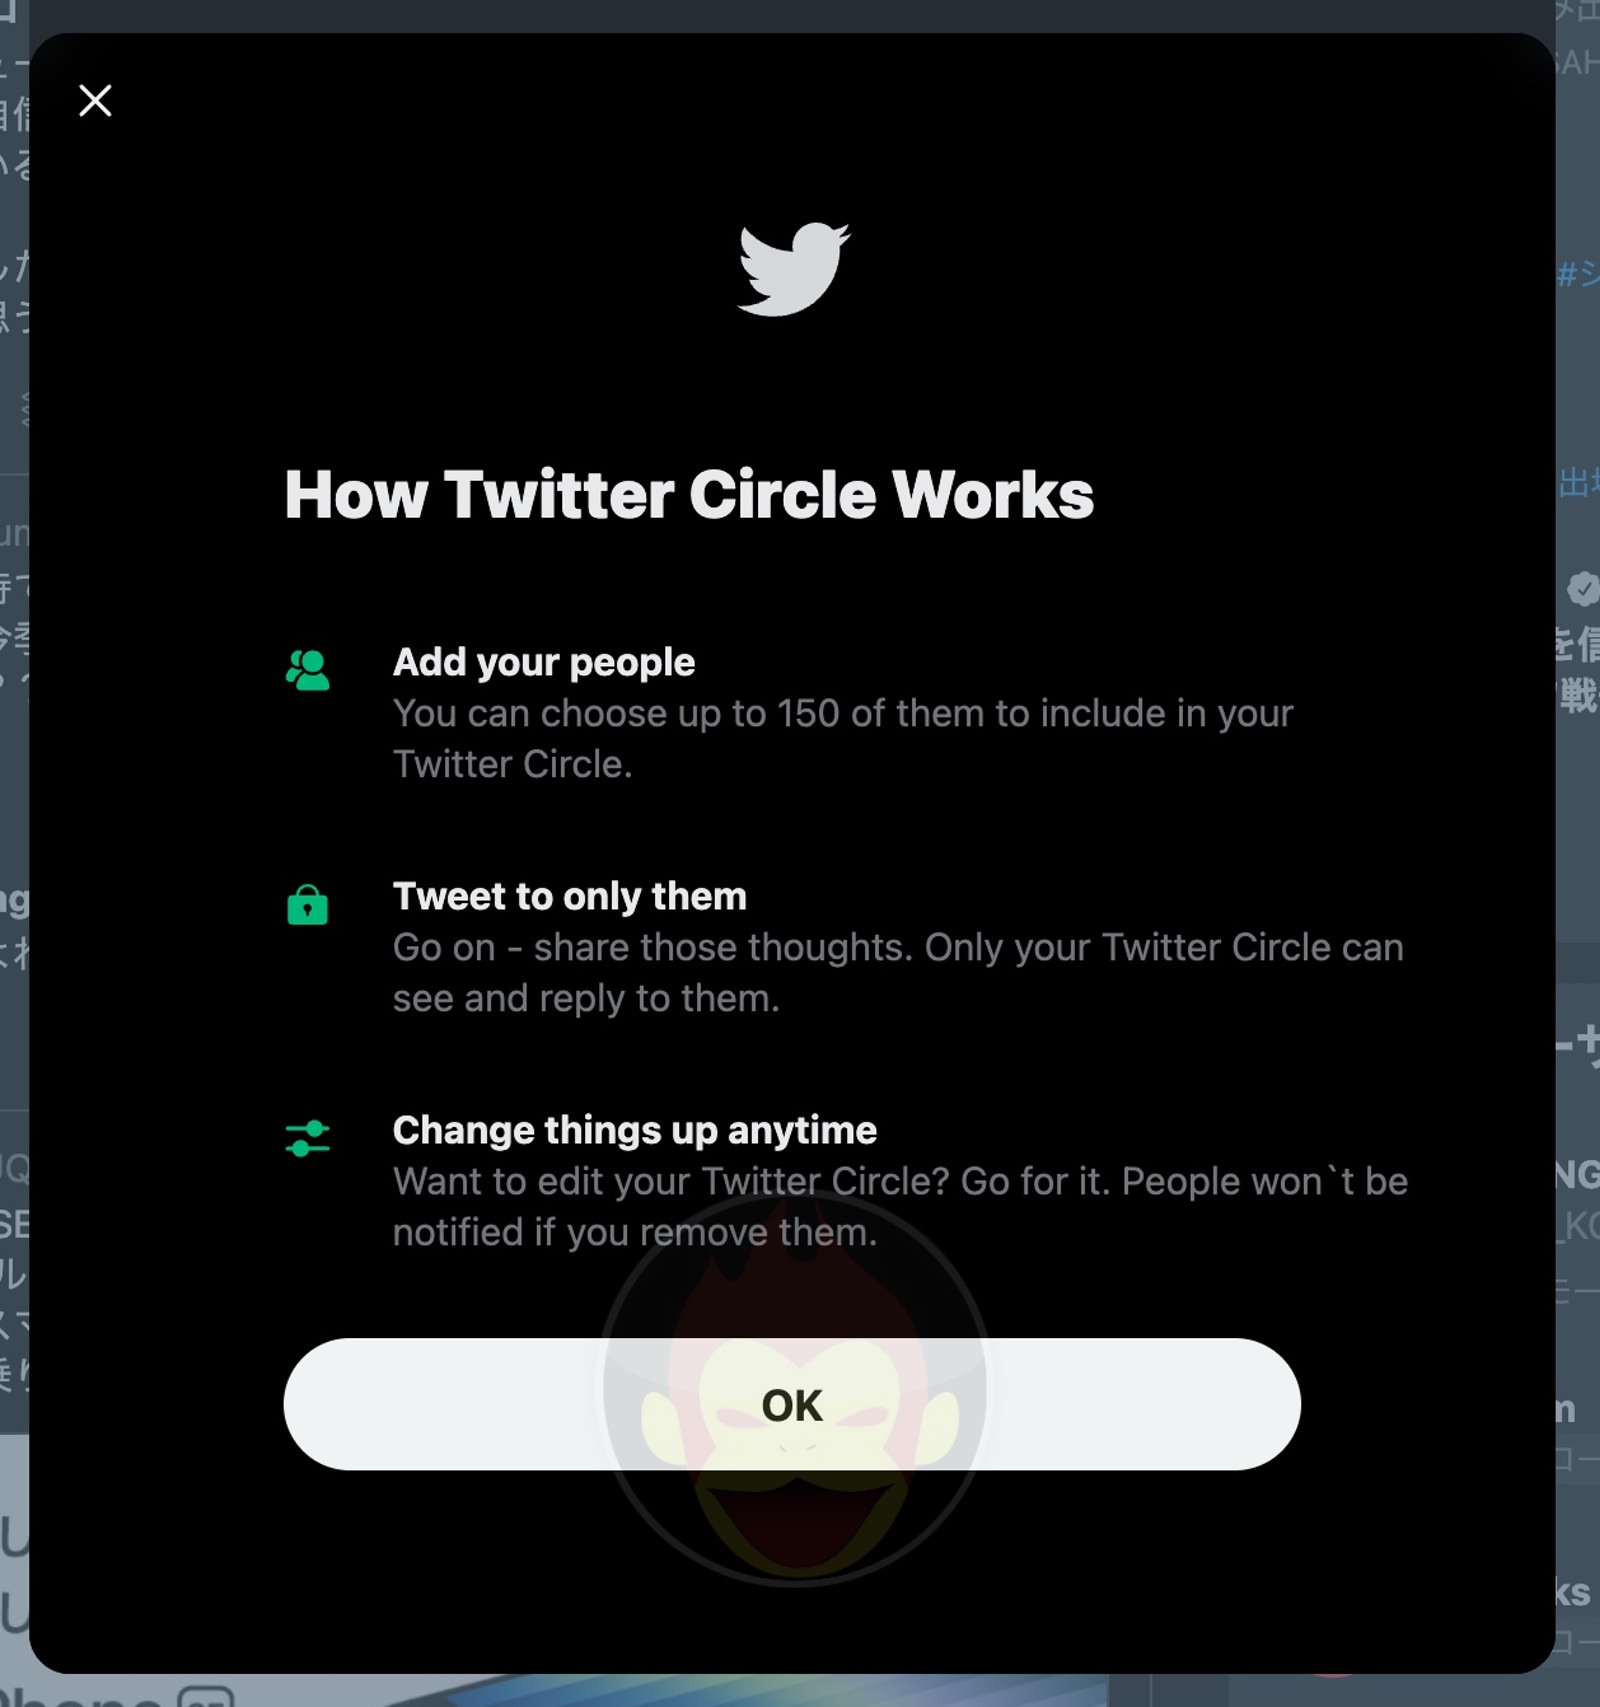 Twitter-Circle-in-testing-02.jpg